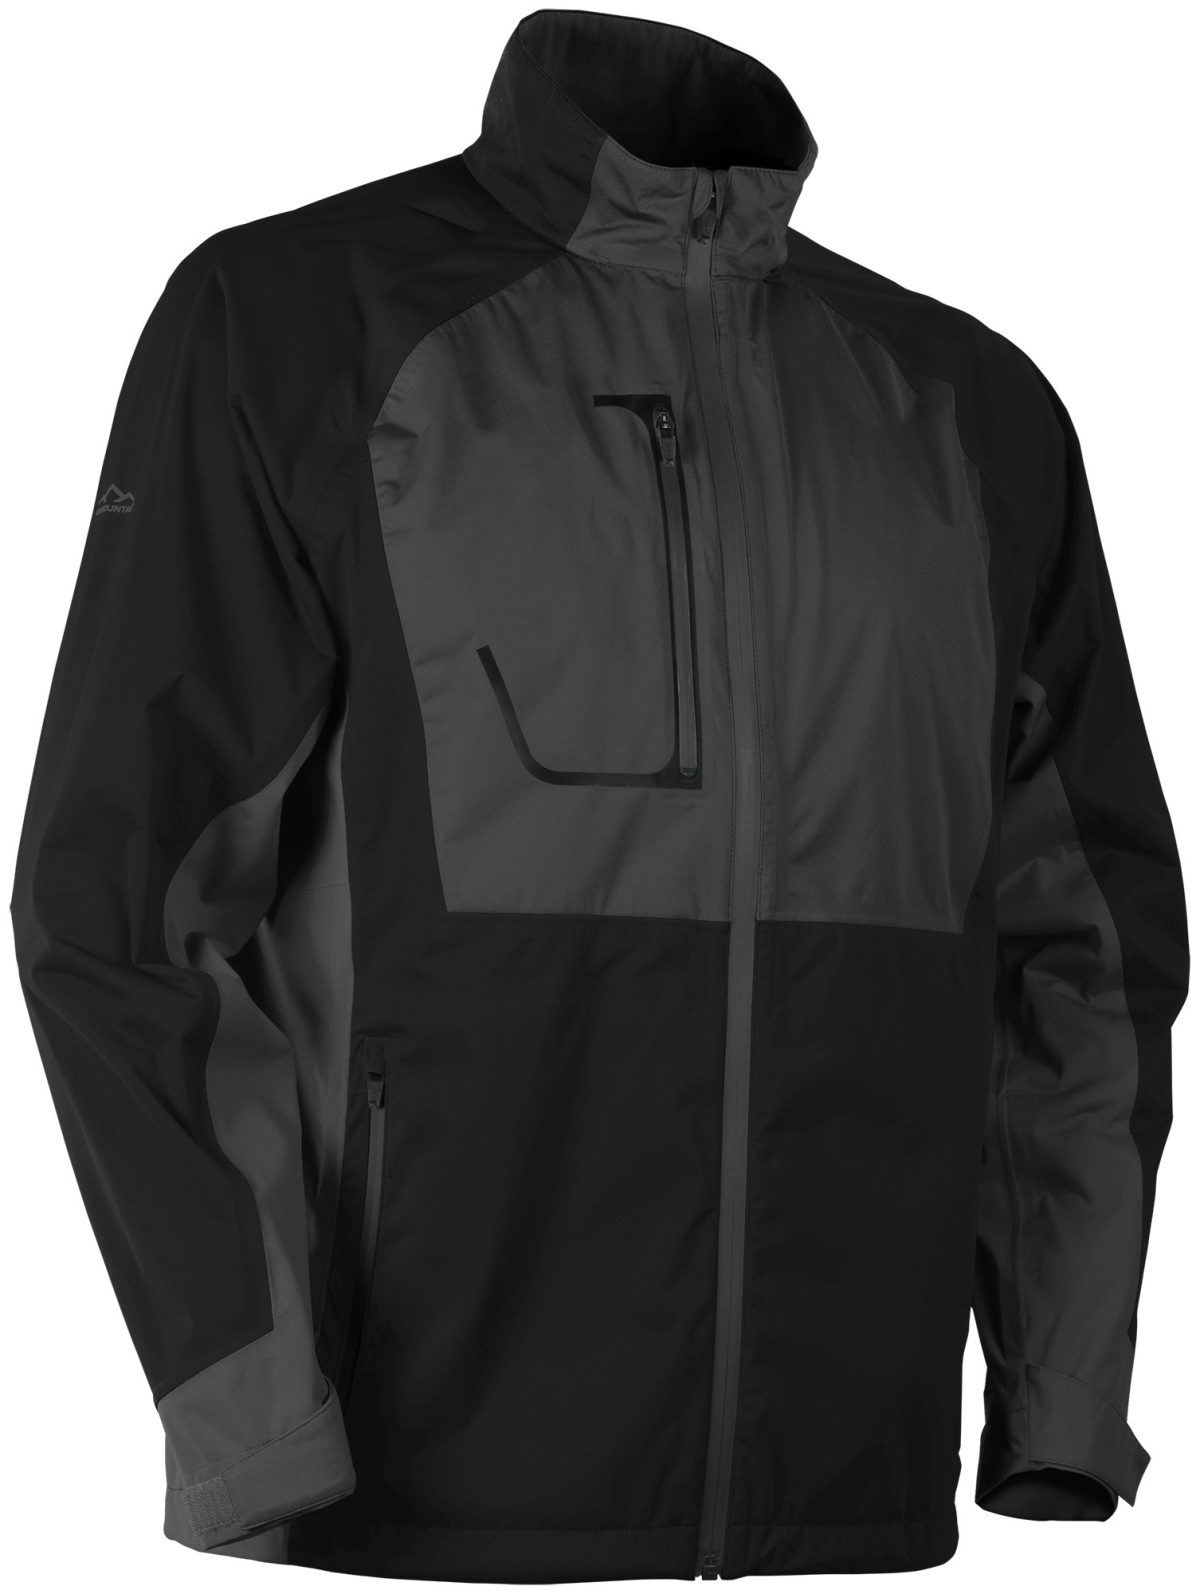 Sun Mountain Men's Tour Series+ Golf Rain Jacket in Black/Steel, Size S